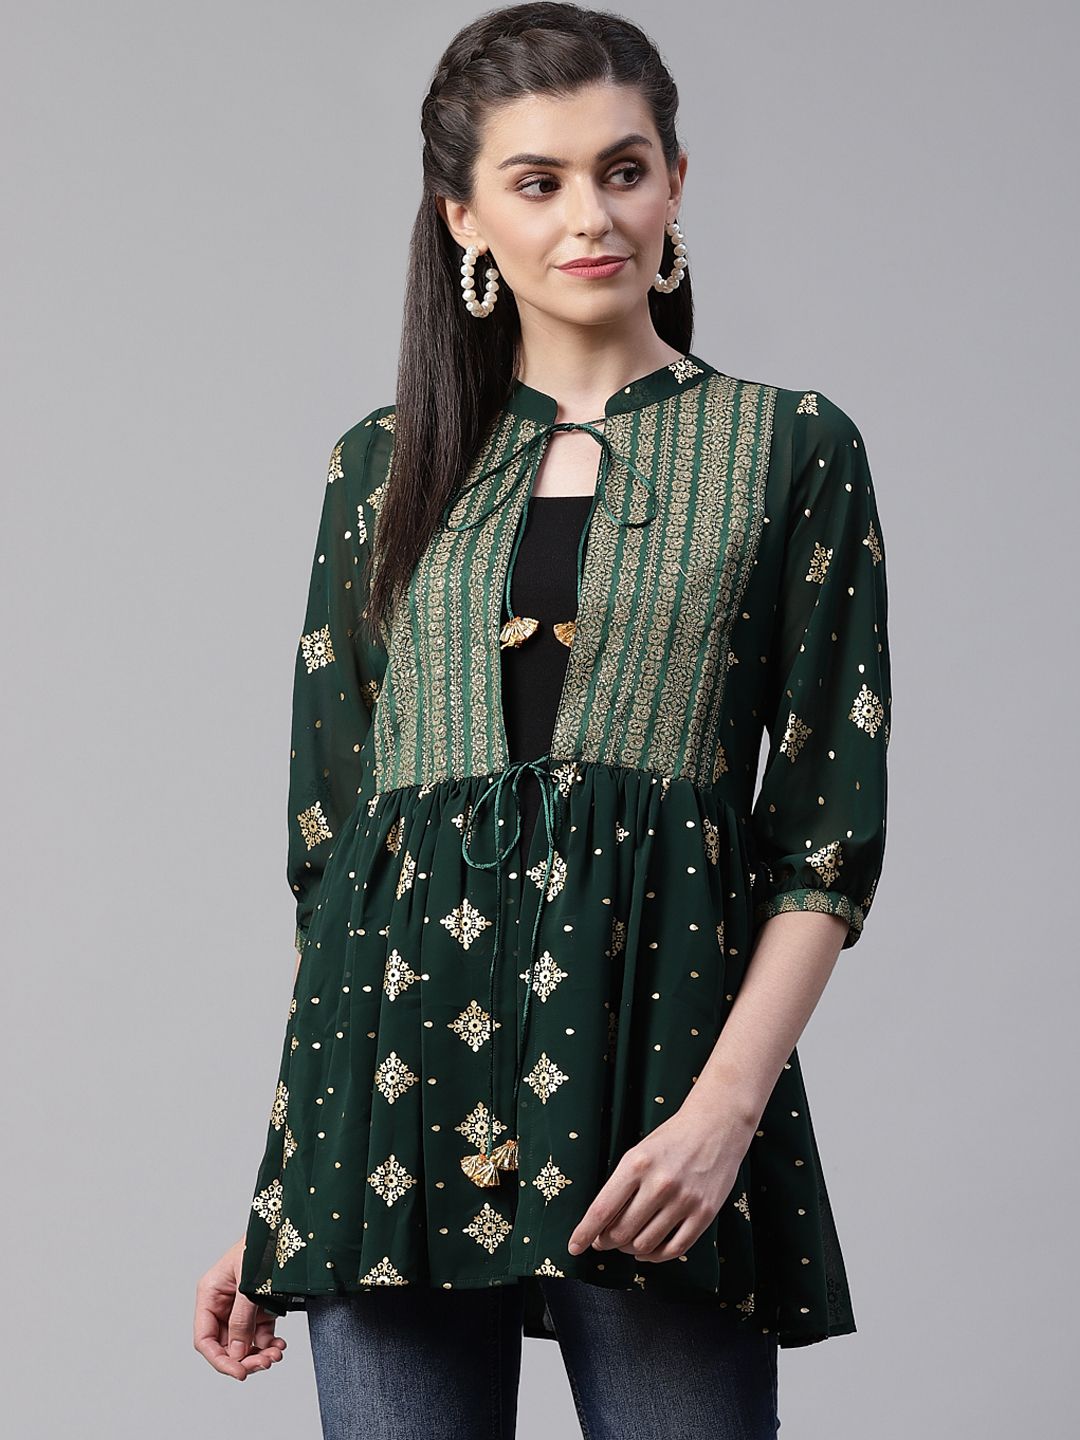 Ahalyaa Women's Green & Golden Printed Semi-Sheer Front-Open Kediya Tunic Price in India